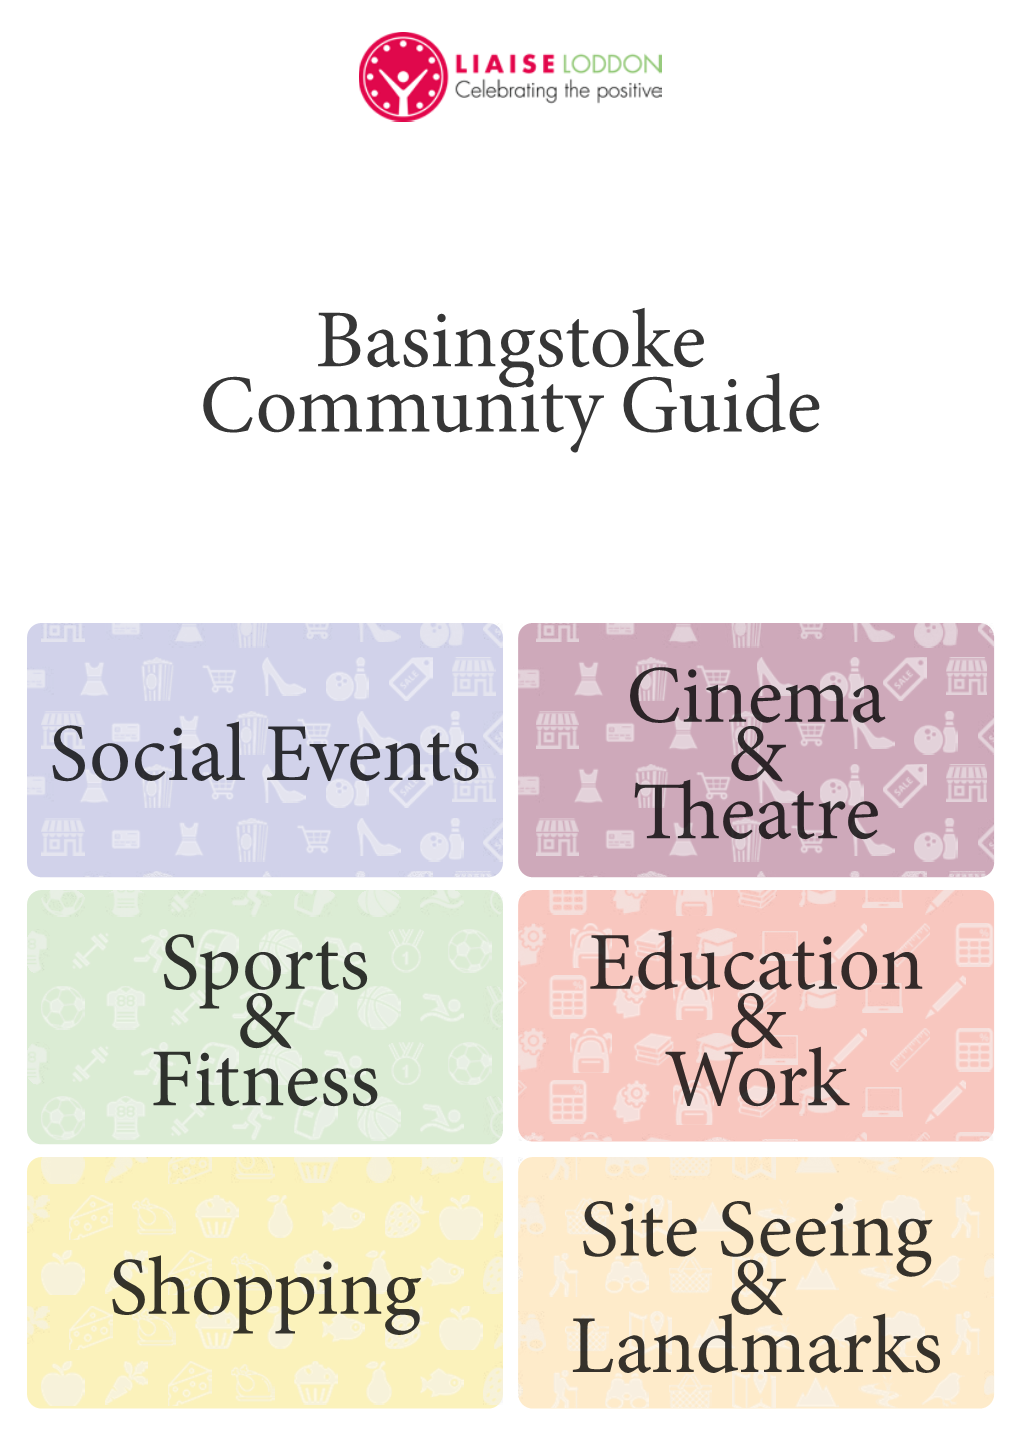 Social Events Basingstoke Community Guide Shopping Cinema & Theatre Education & Work Site Seeing & Landmarks Sports